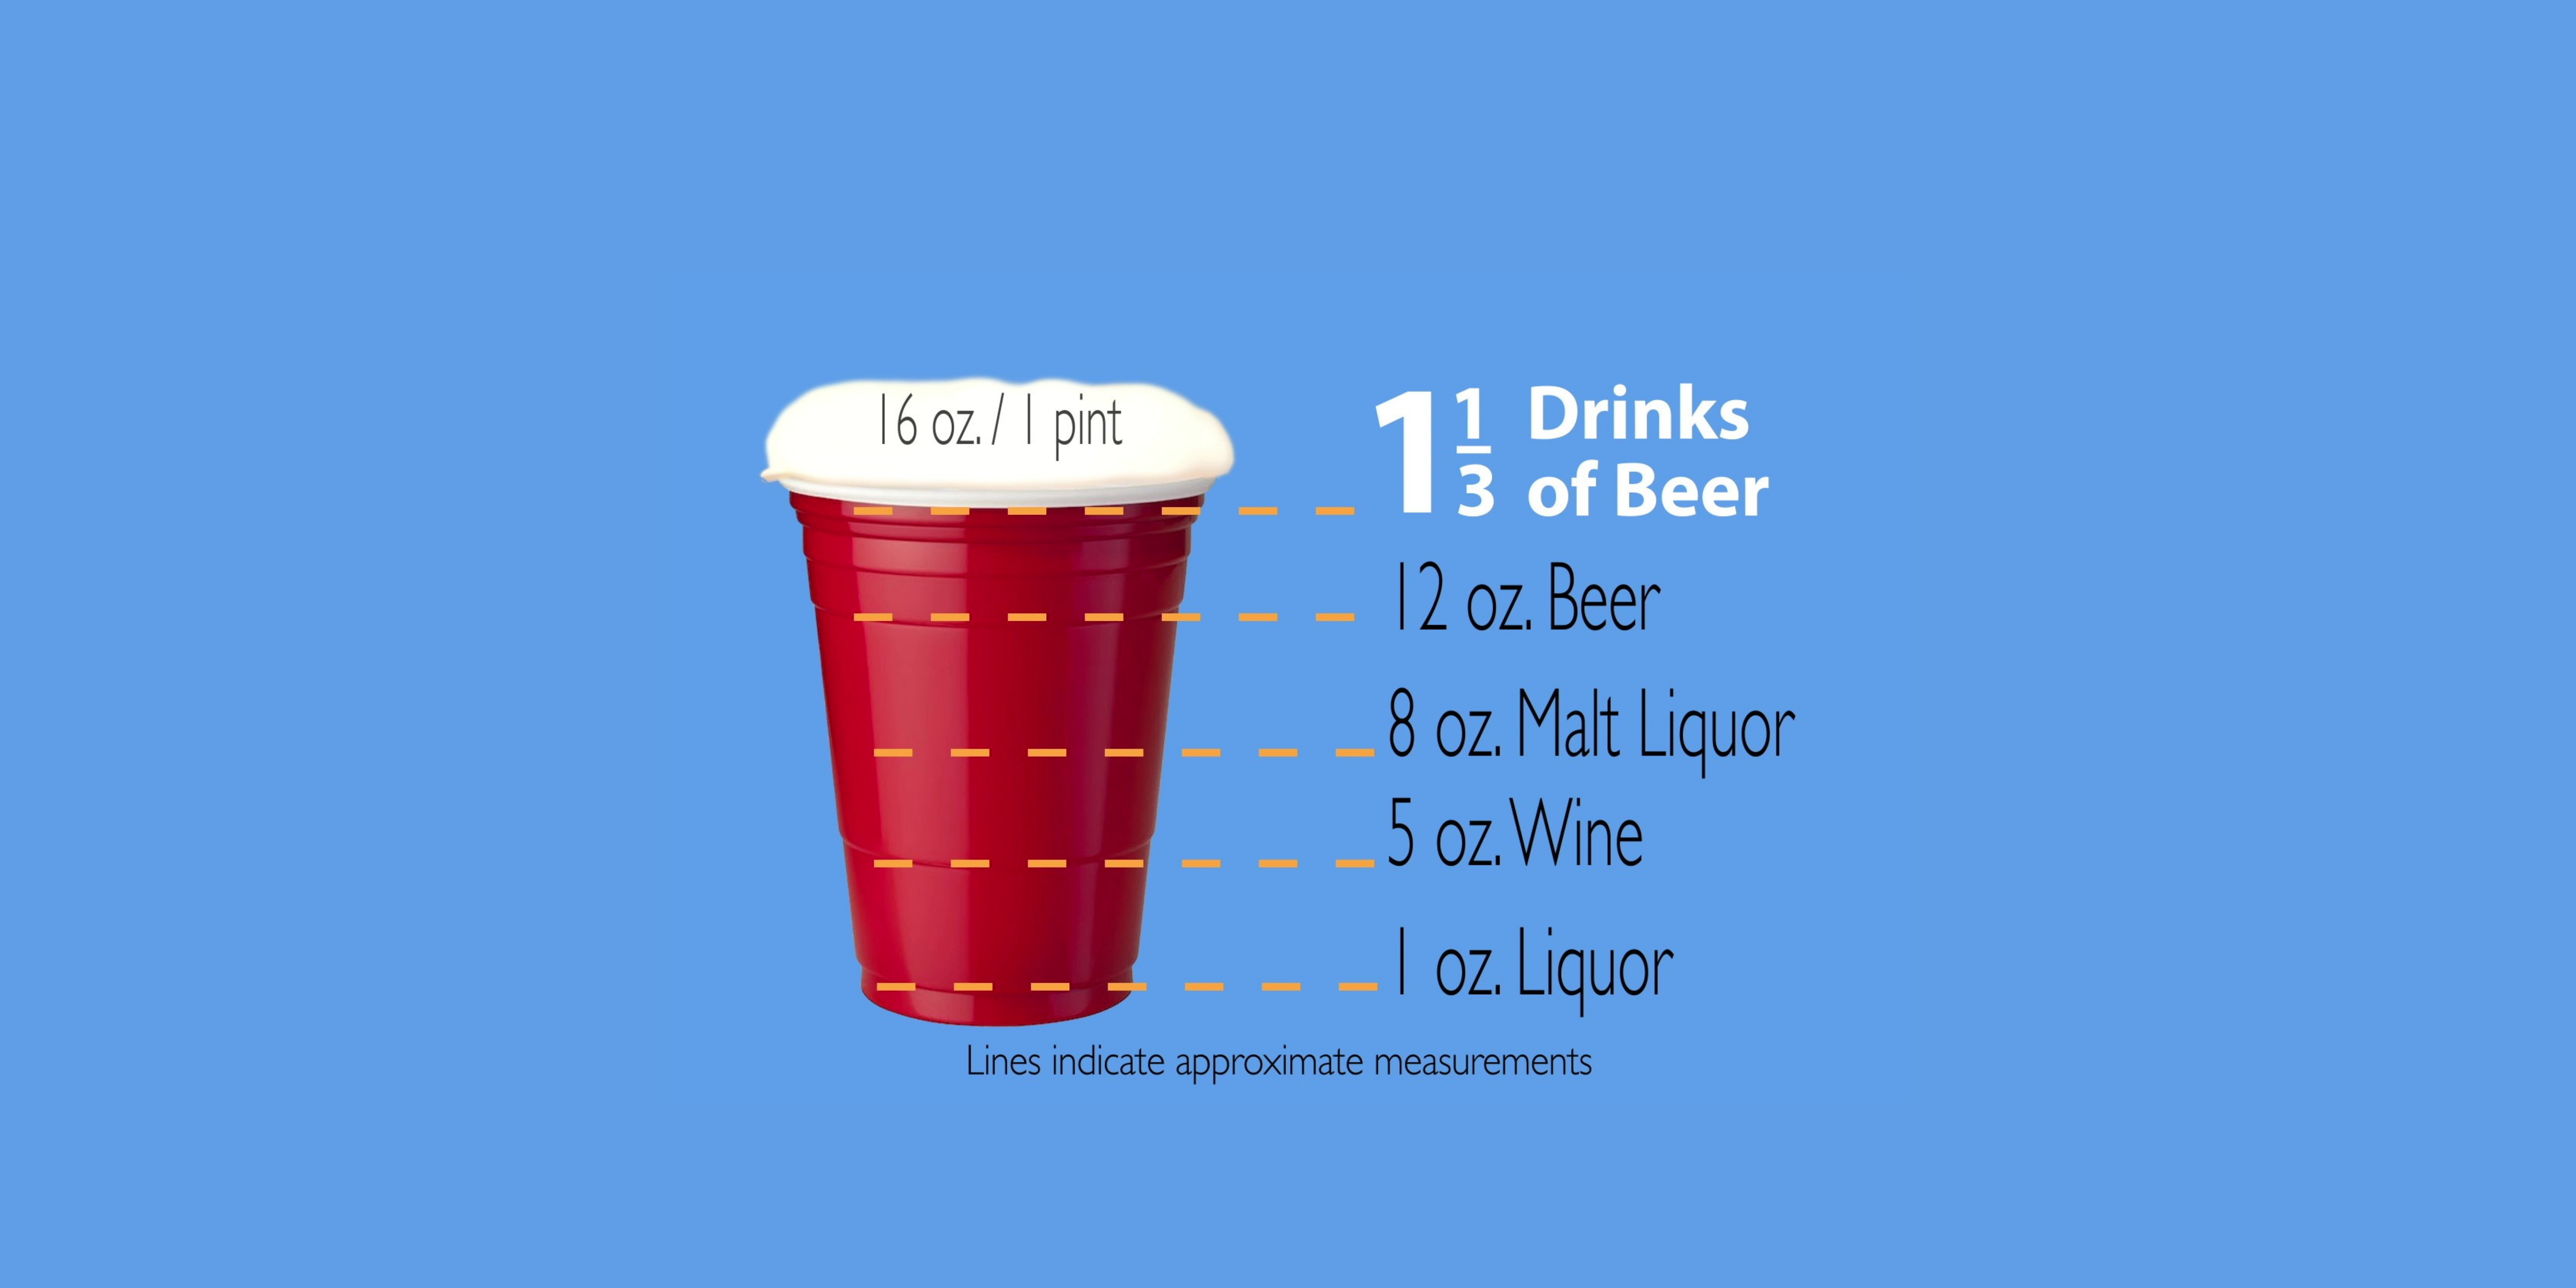 Alcohol education